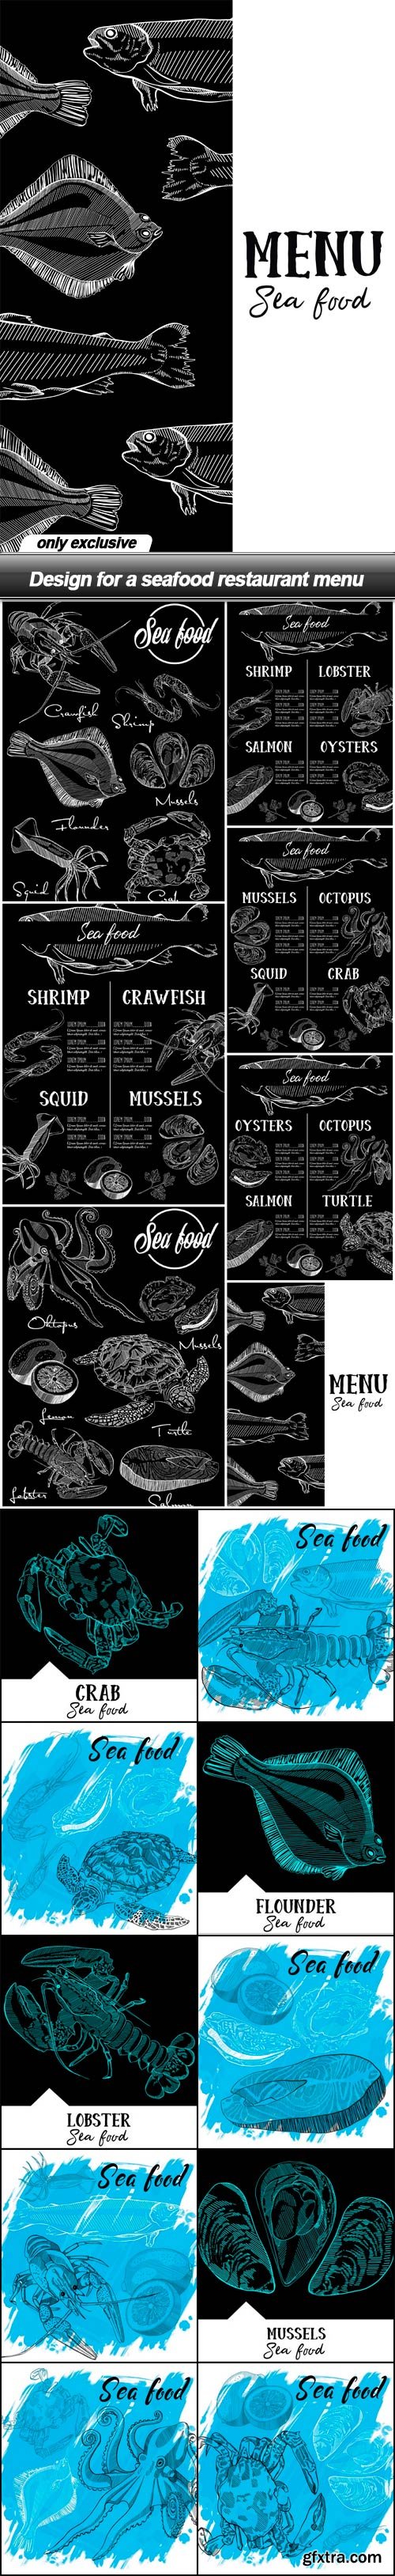 Design for a seafood restaurant menu - 17 EPS